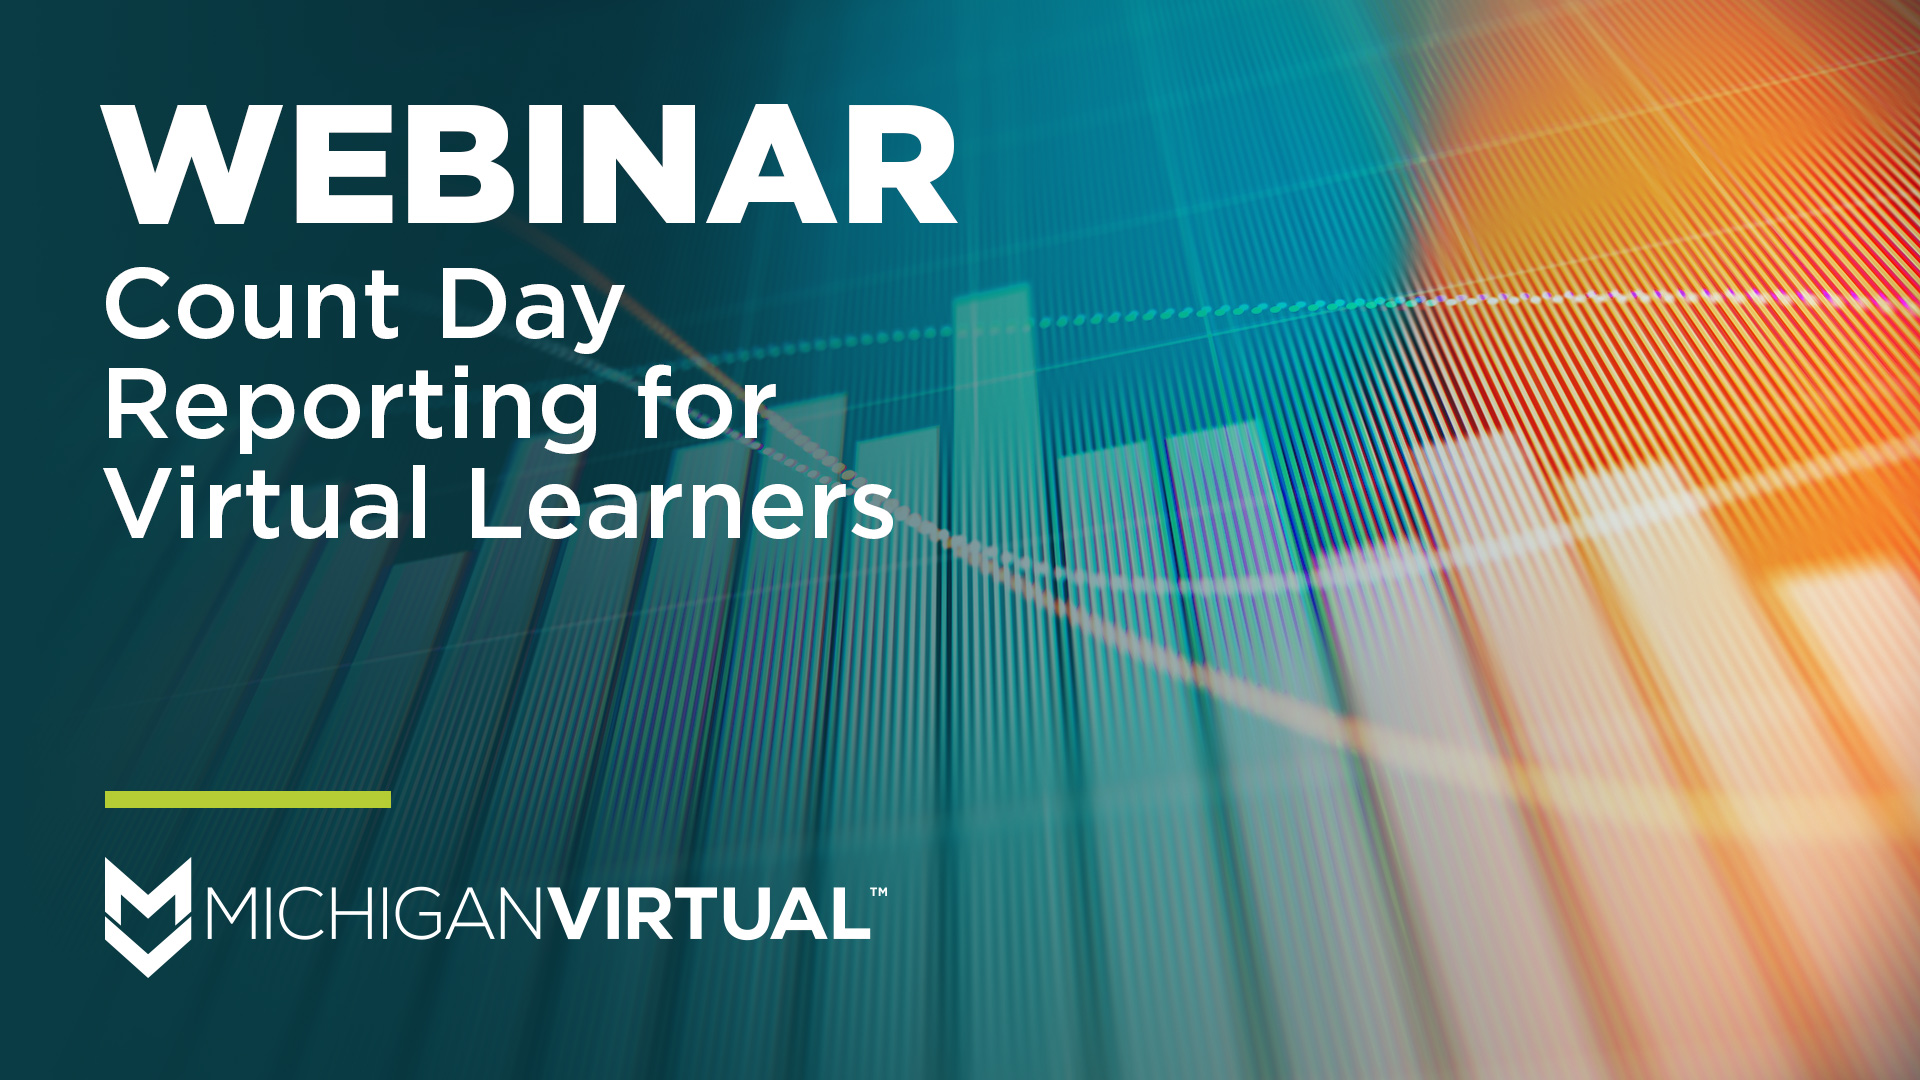 [Webinar] Count Day Reporting for Virtual Learners Michigan Virtual